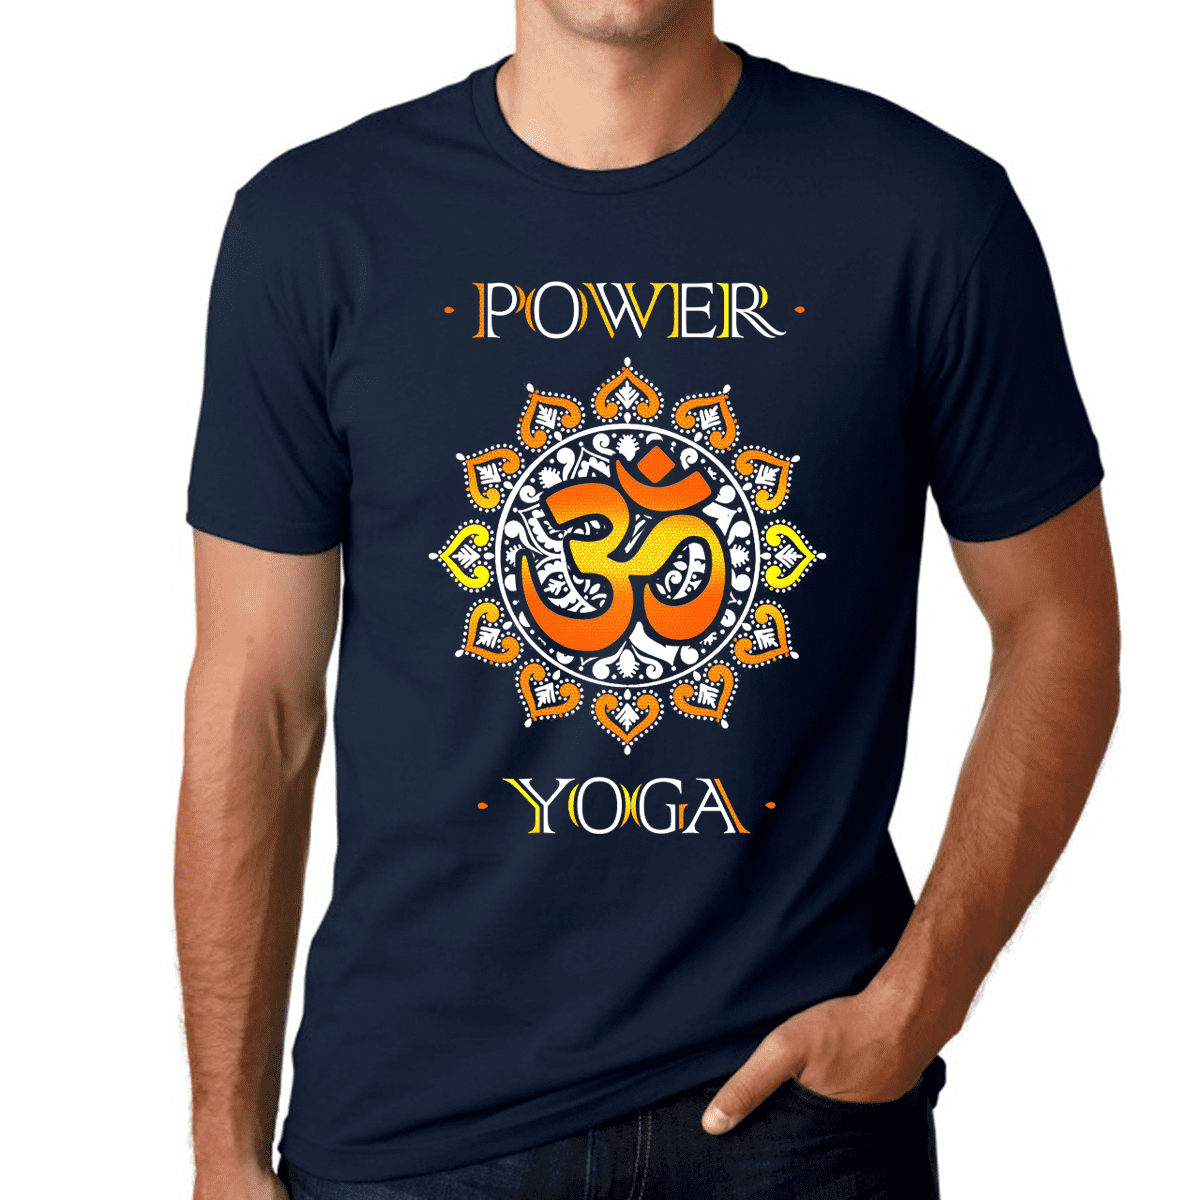 yoga-t-shirt T-Shirts  Buy yoga-t-shirt T-shirts online for Men